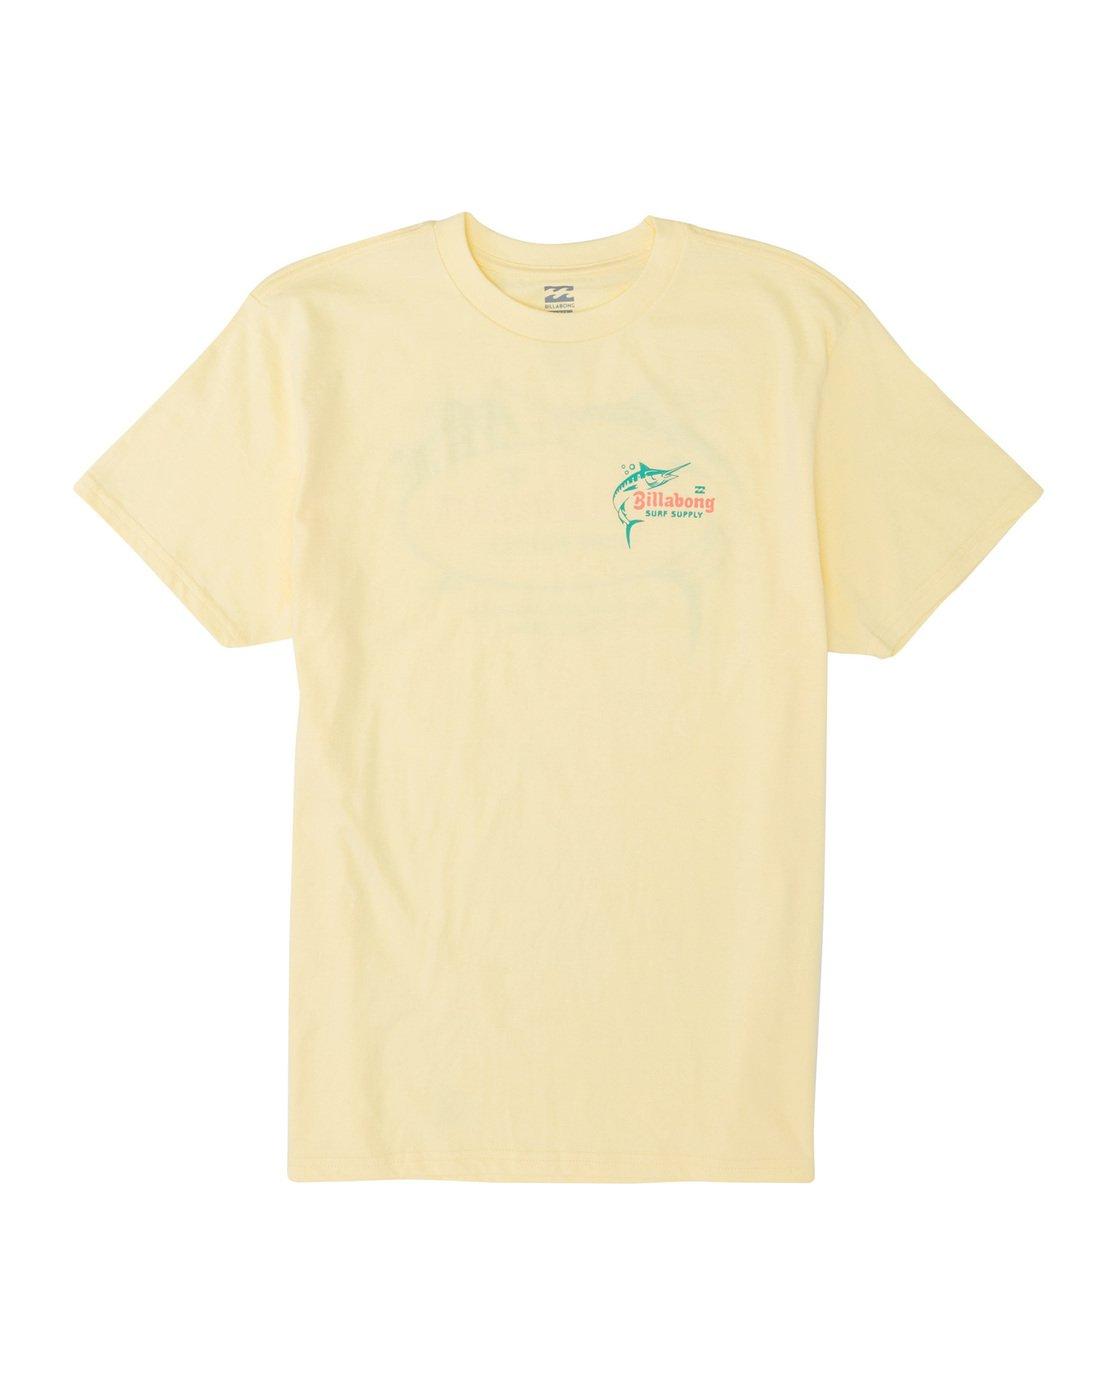 Billabong Cotton Surf Supply Short Sleeve T-shirt in Yellow for Men - Lyst